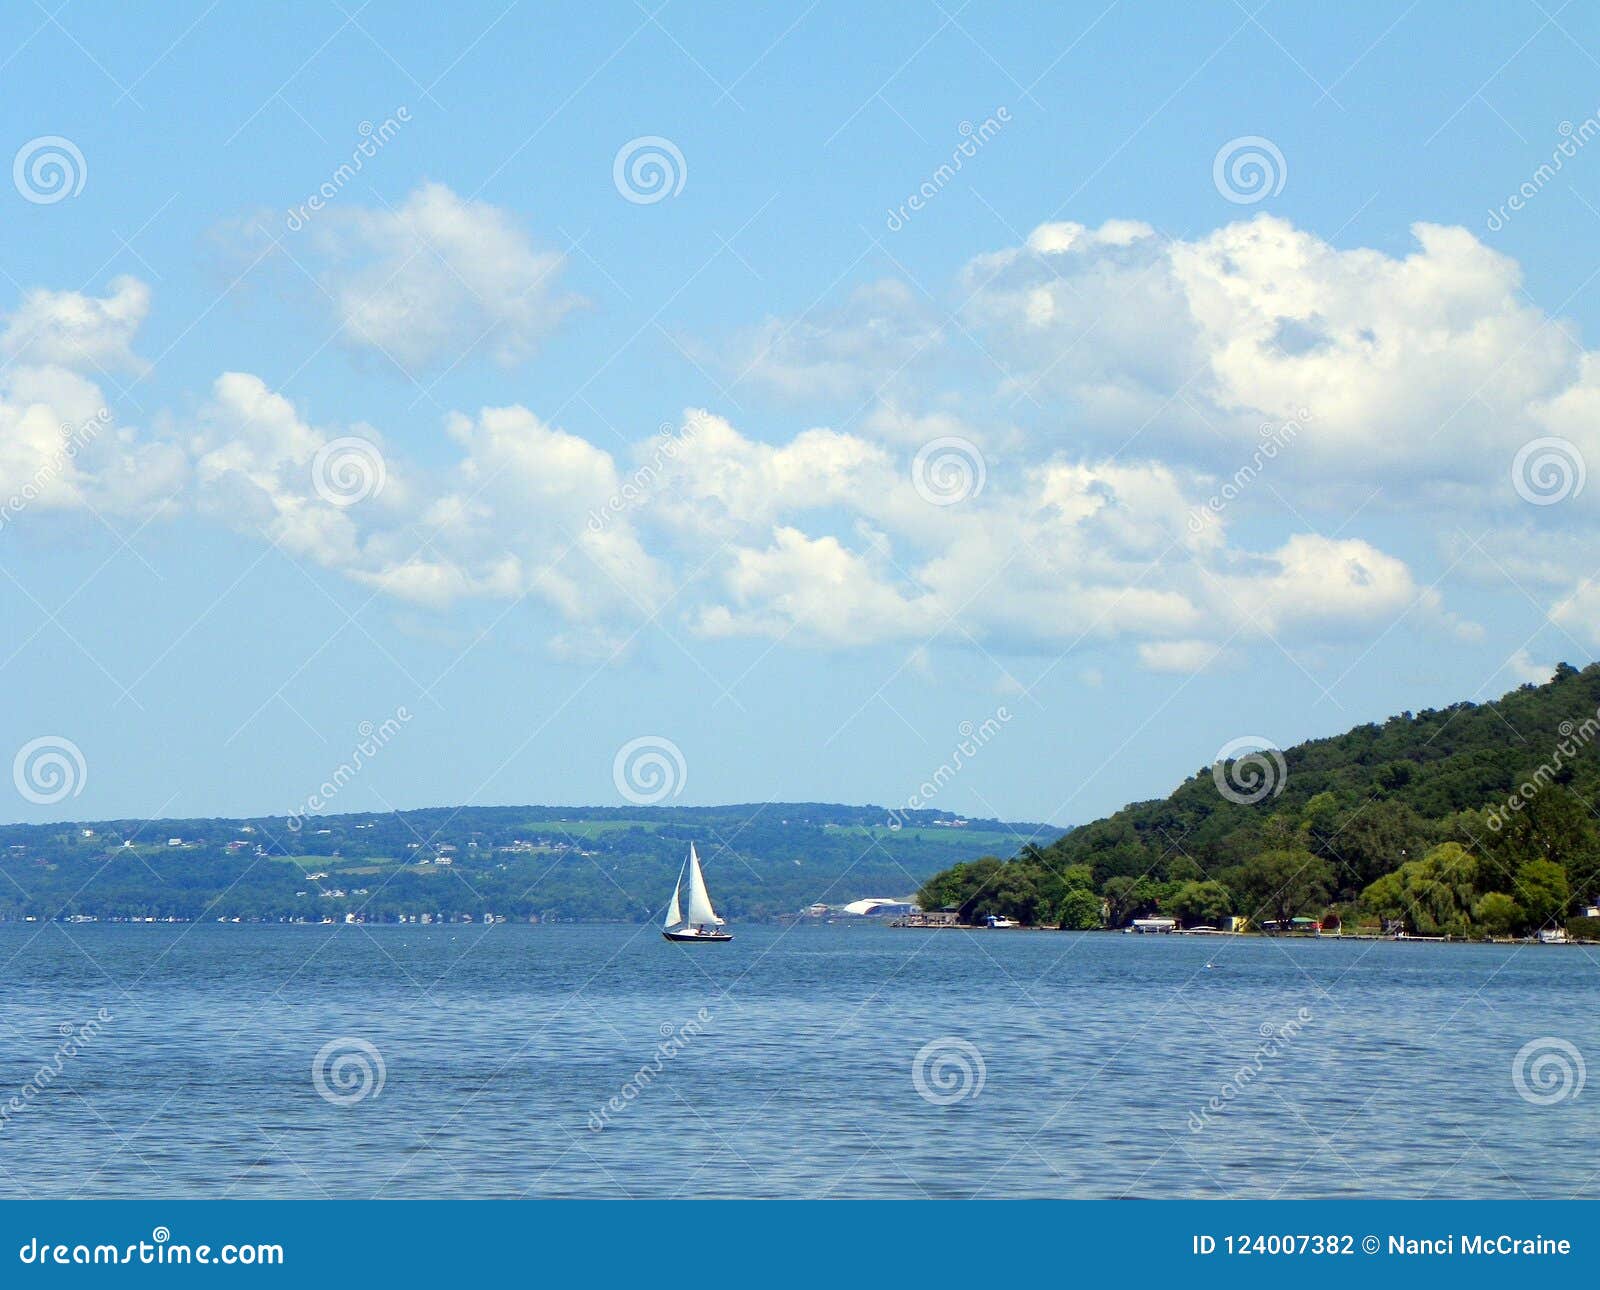 sailing on cayuga lake near ithaca in the fingerlakes